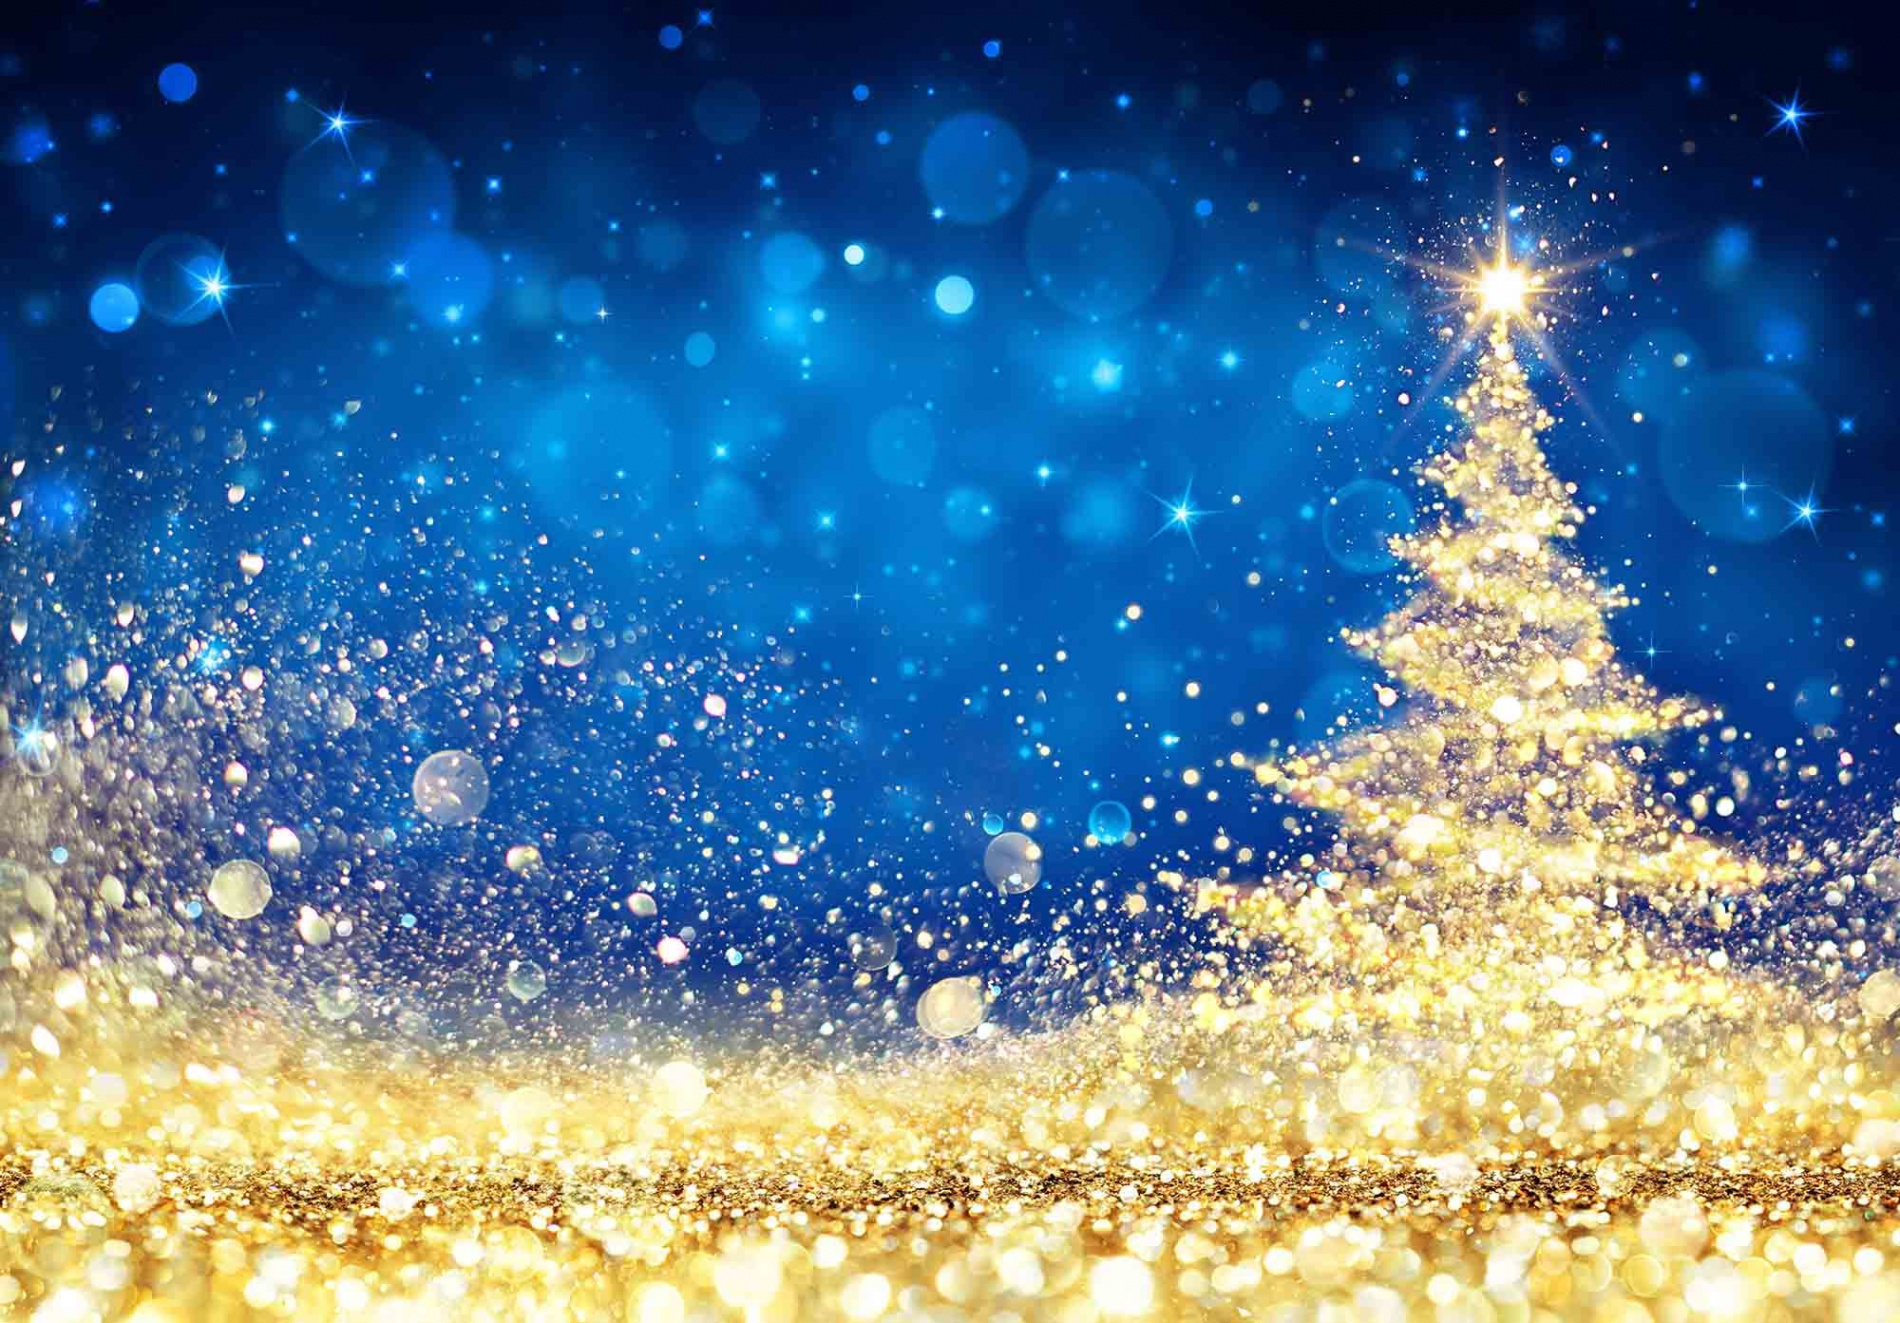 Shiny Christmas Tree - Golden Dust Glittering In The Blue